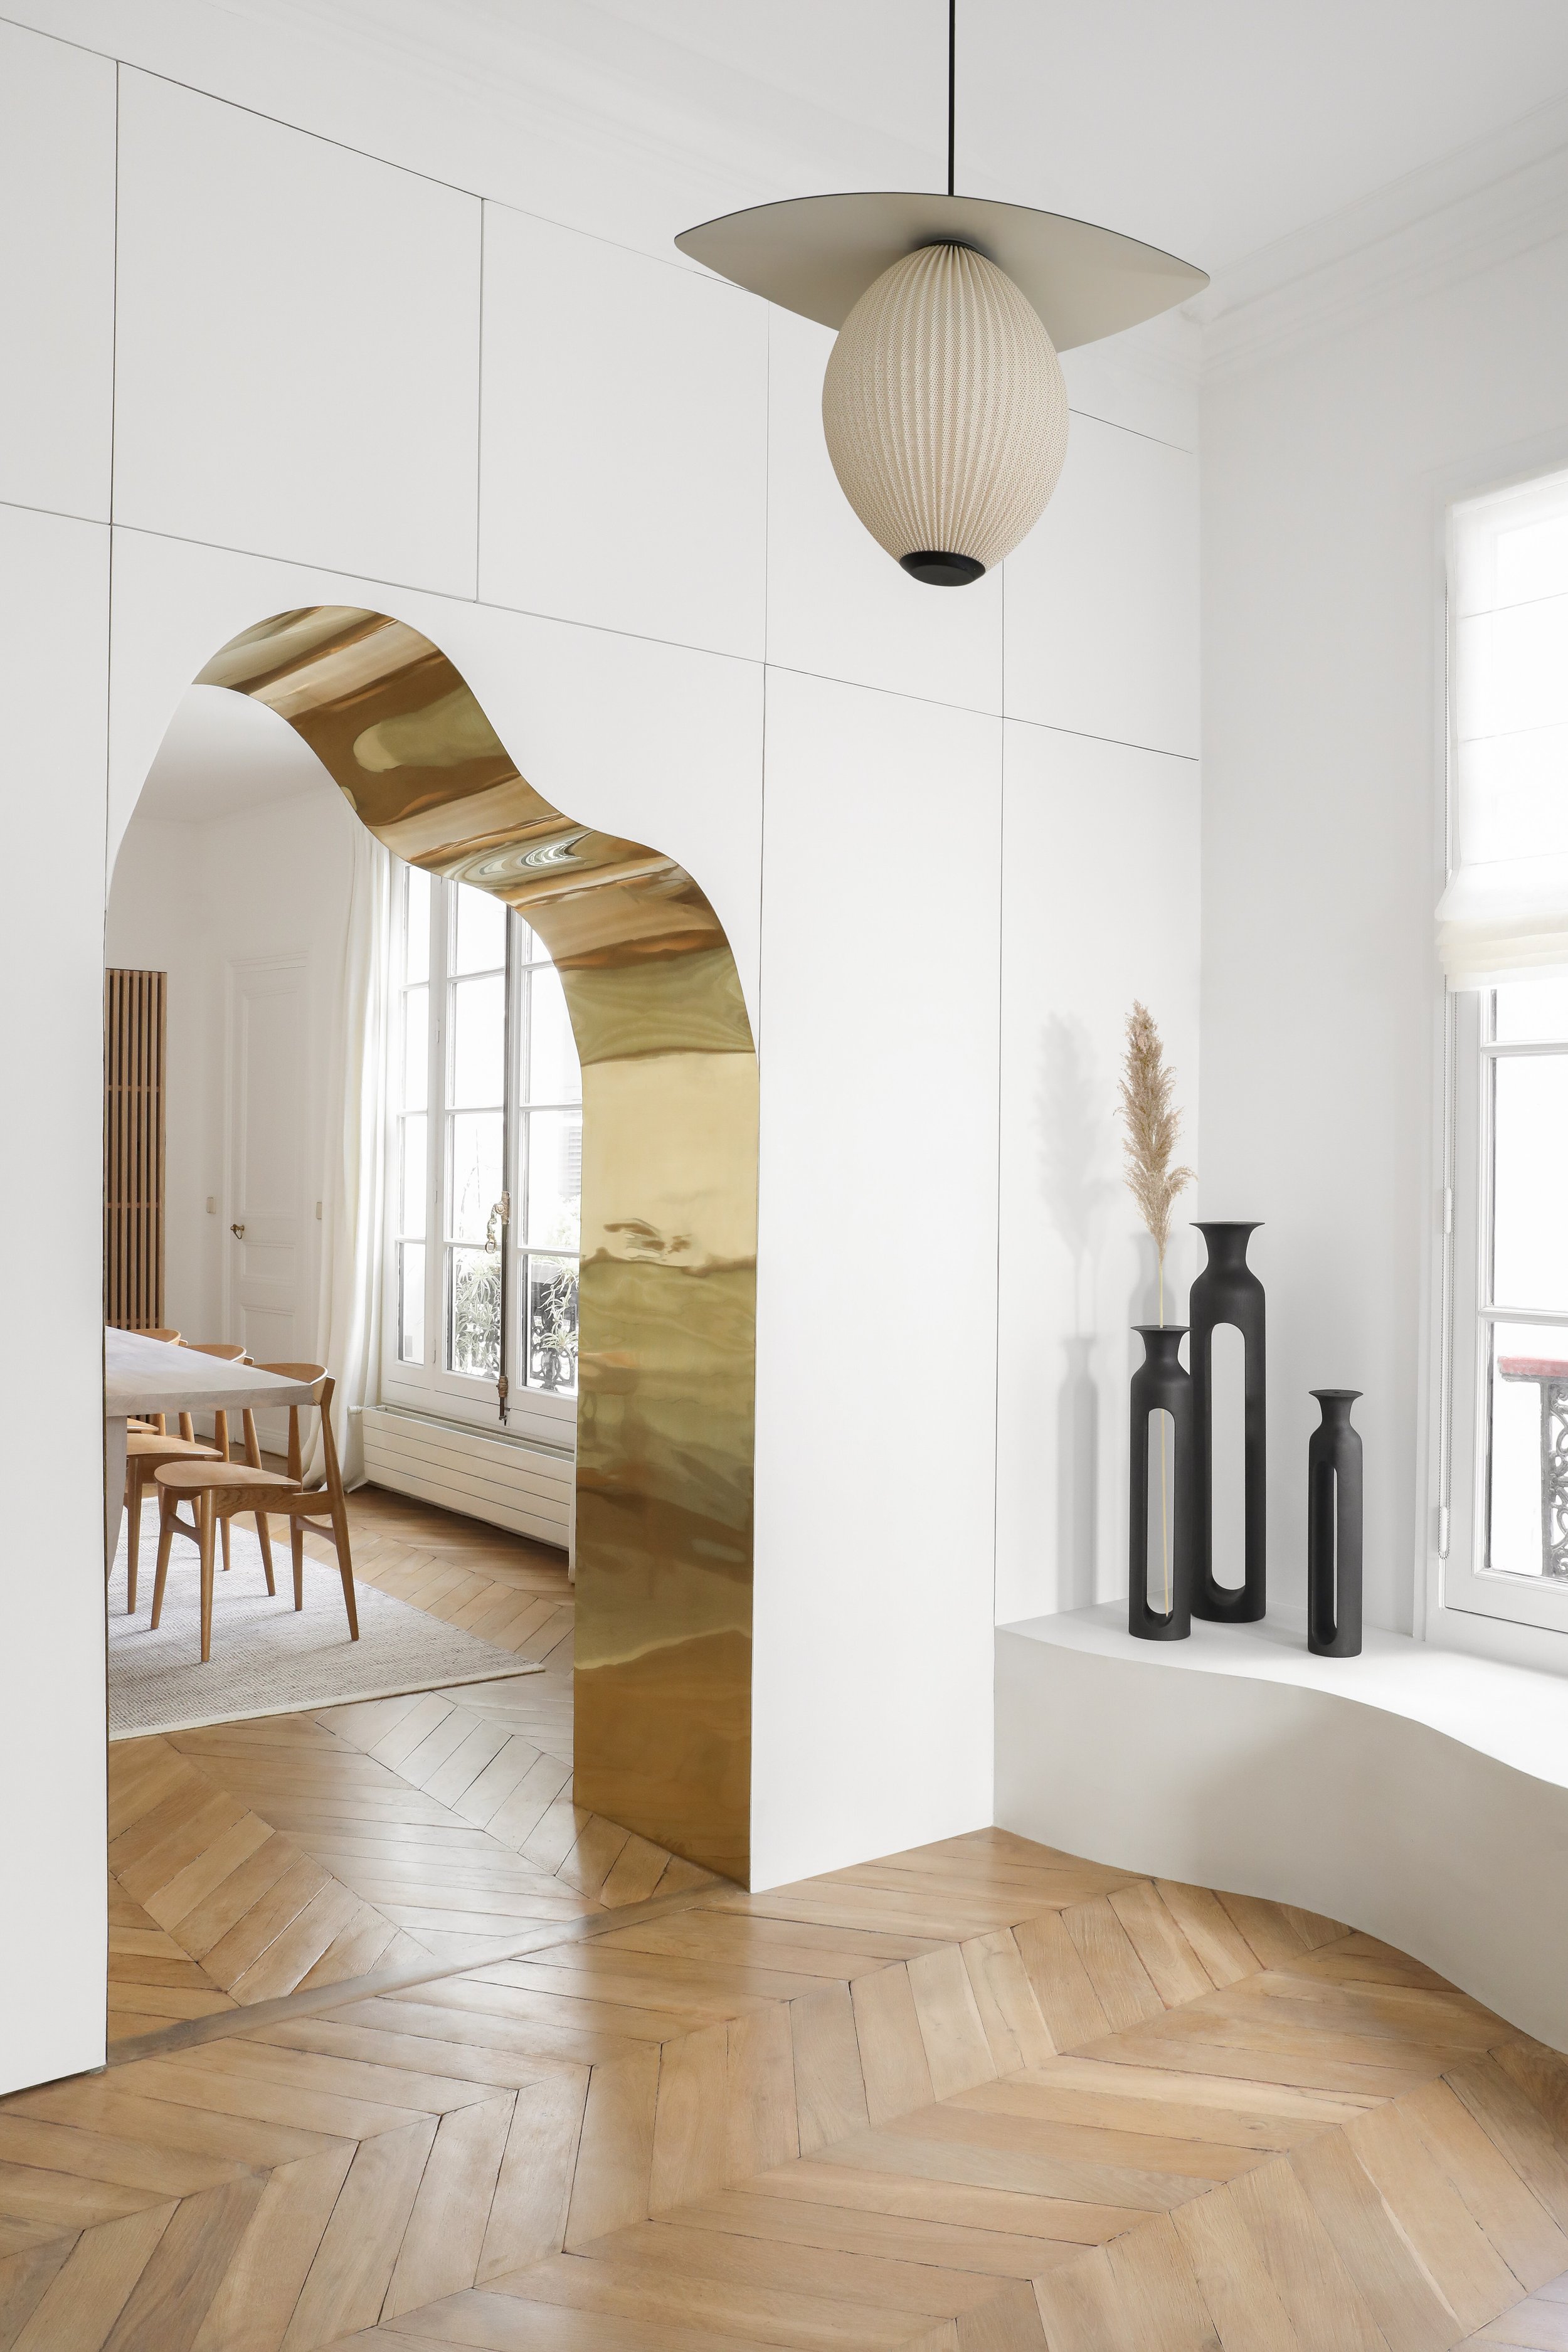 heju architecture renovation paris appartement art moderniste 2.jpg